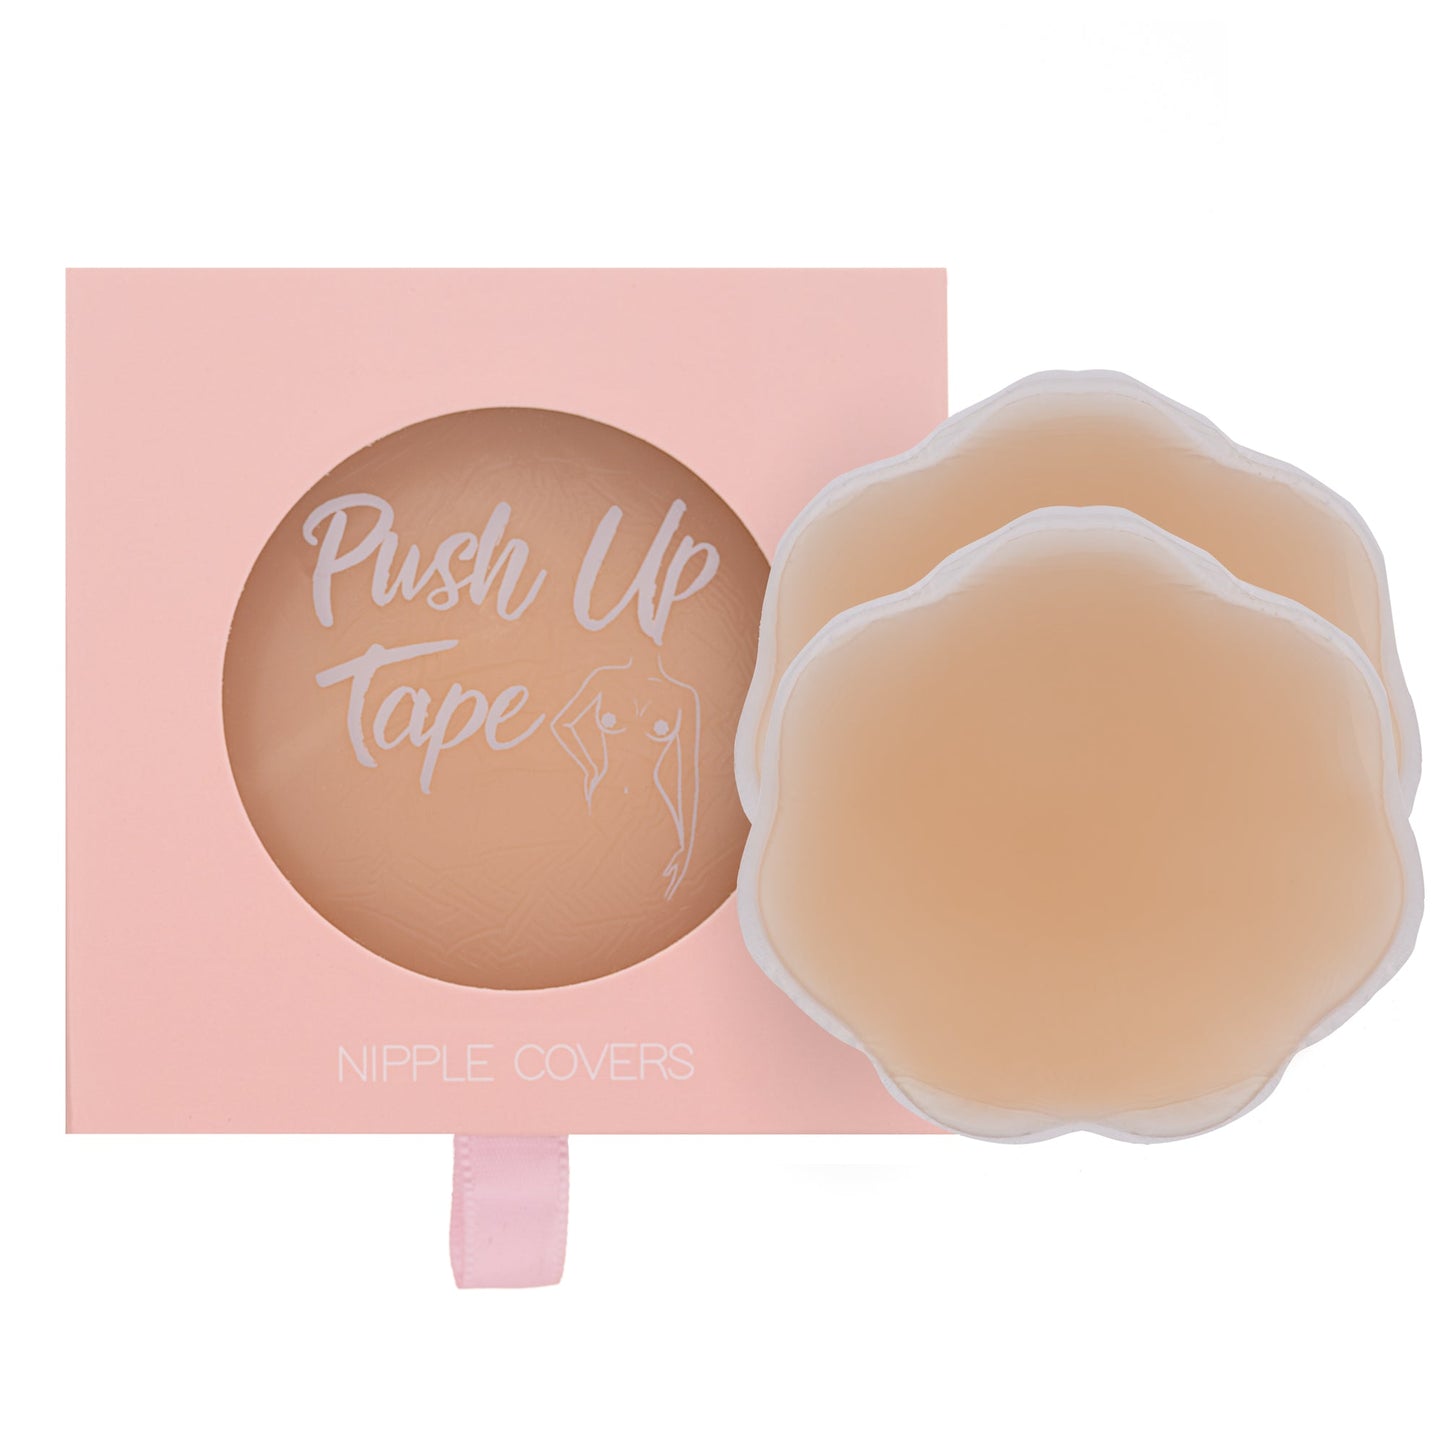 Premium Nipple Covers. – Push Up Tape